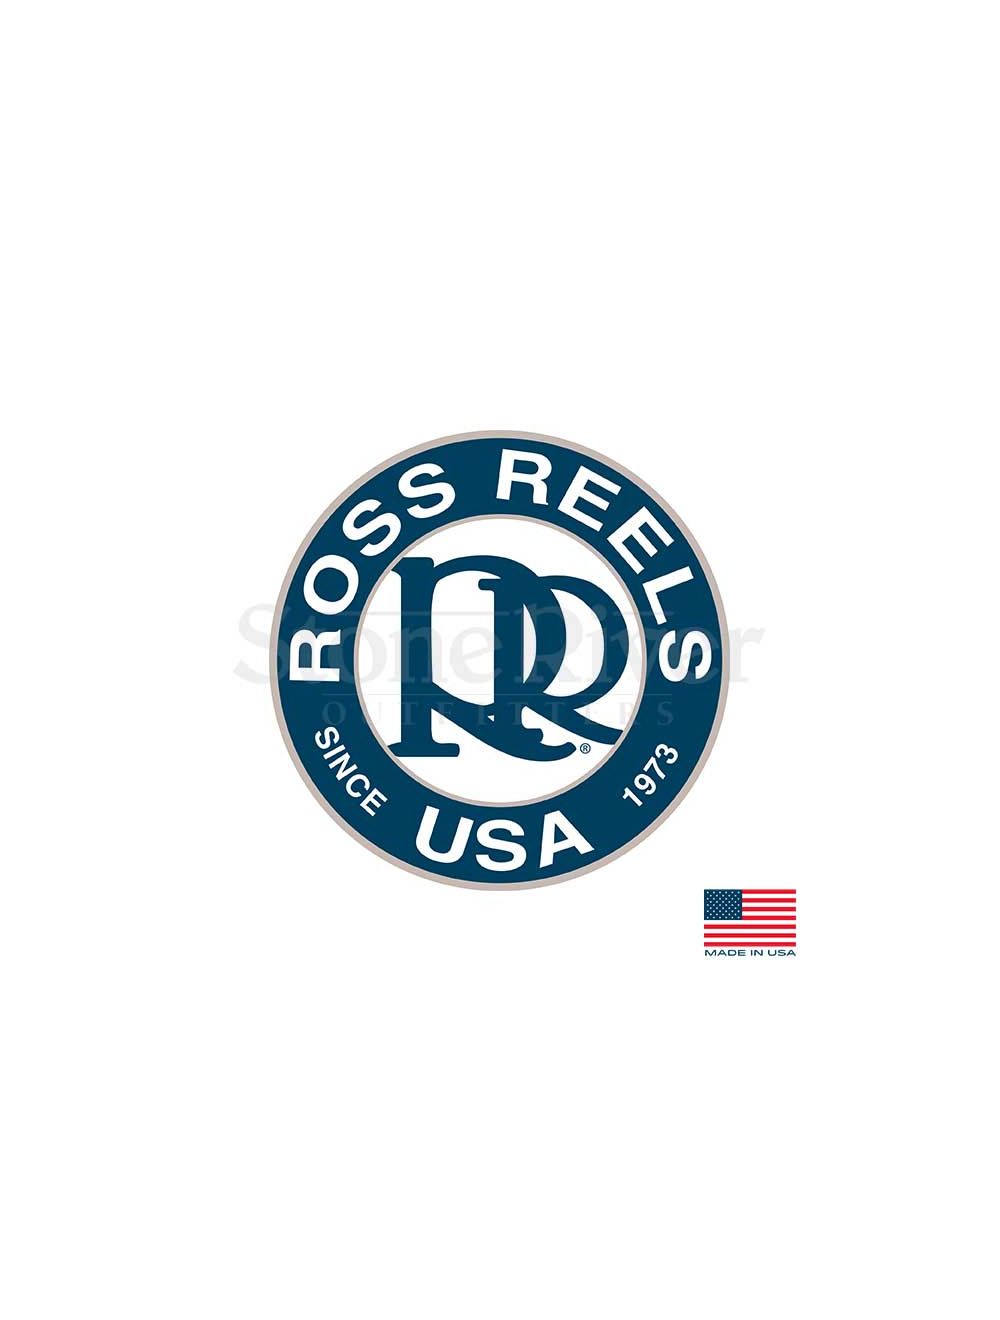 Ross Colorado LT Fly Reel - 4/5 - Matte Black